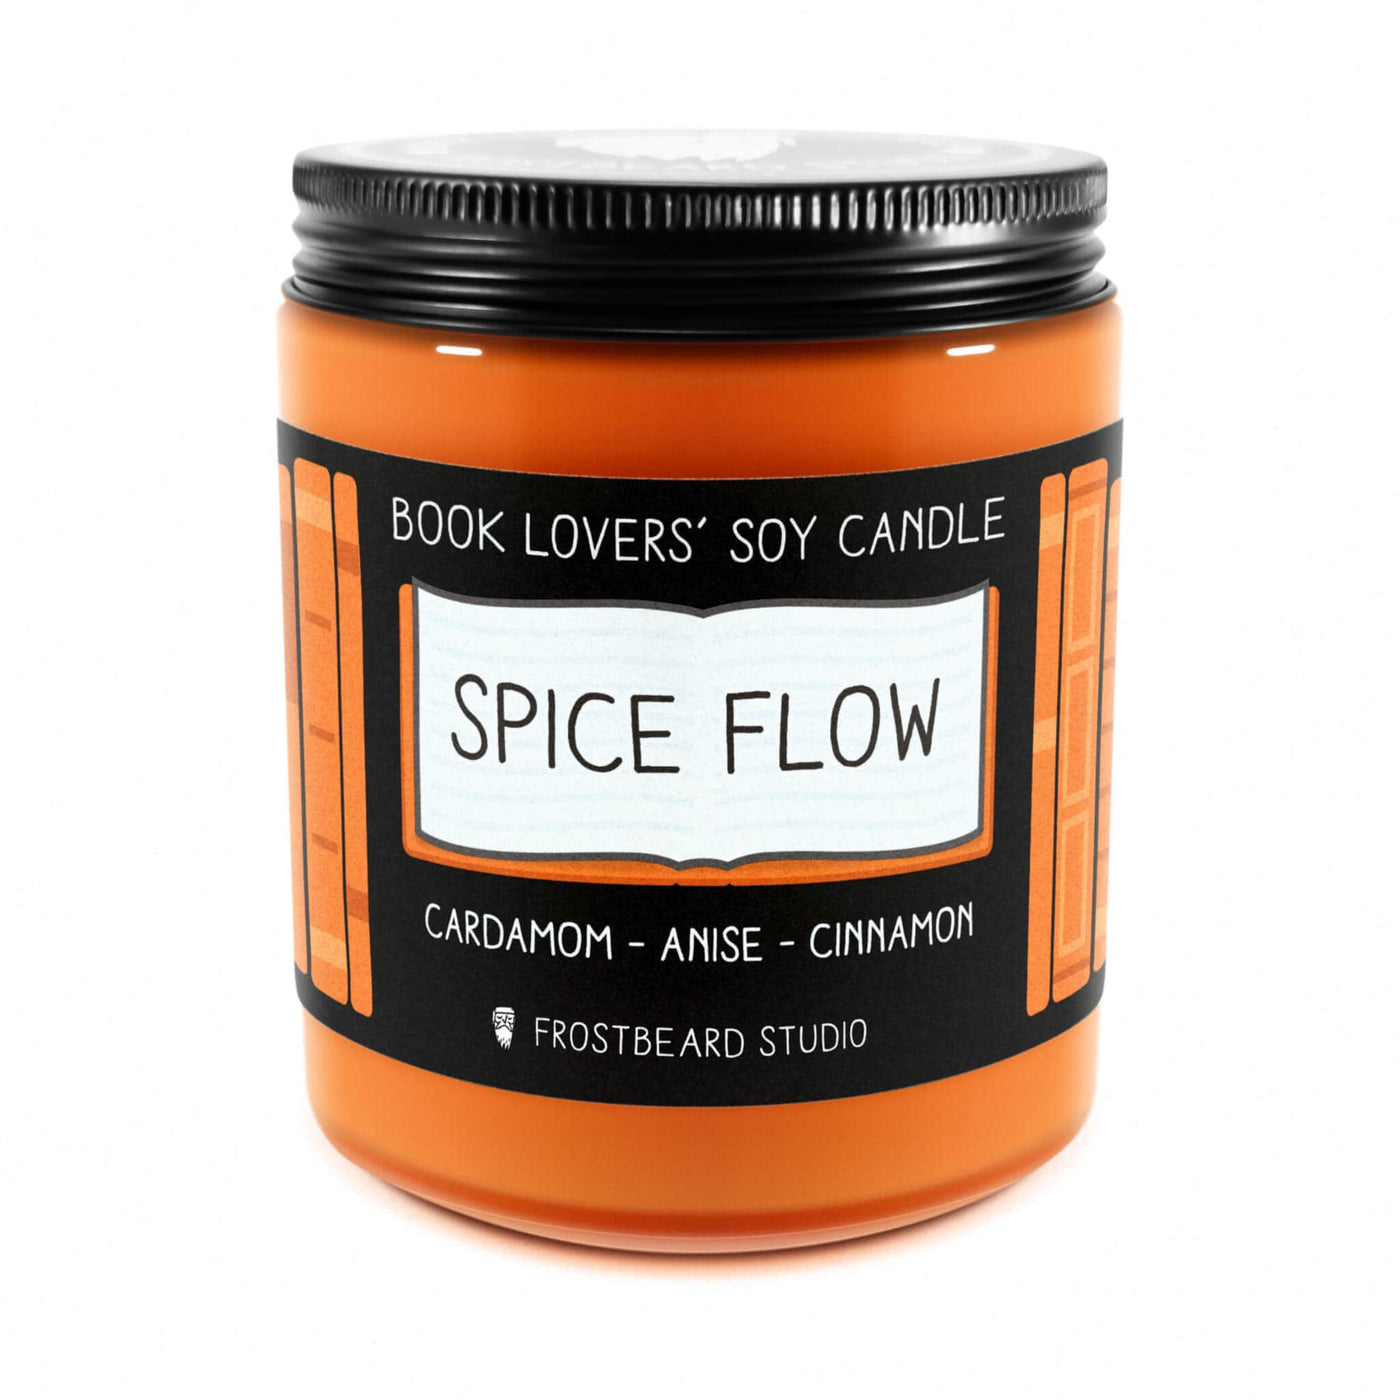 Spice Flow - 8 oz Jar - Book Lovers' Soy Candle - Frostbeard Studio